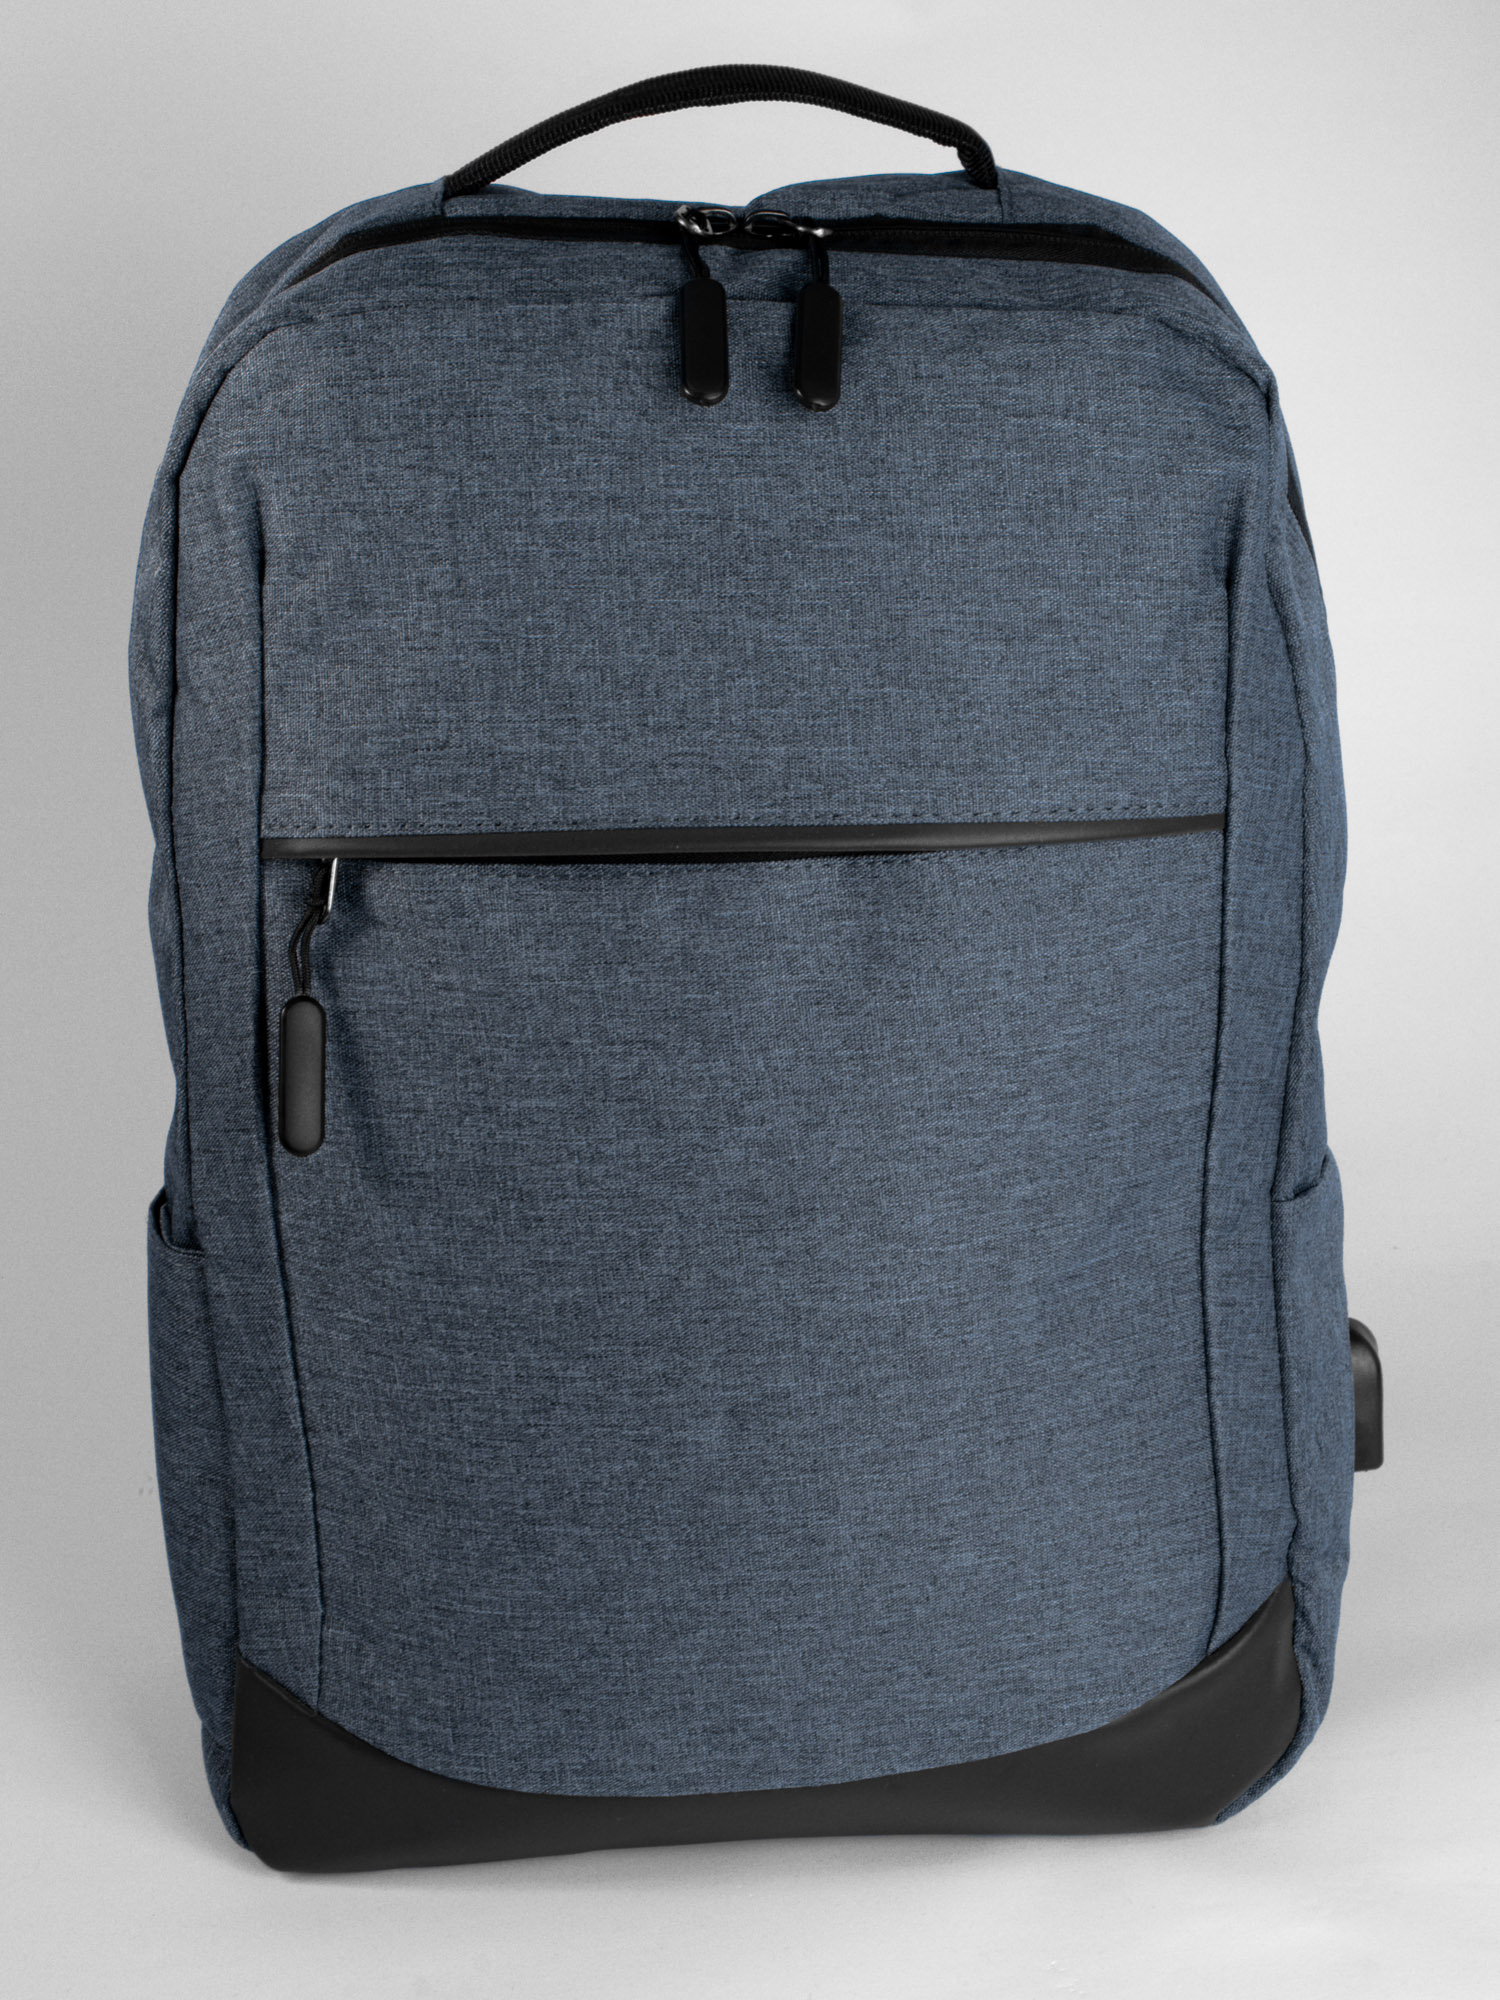 Backpack Υφασμάτινο Ανδρικό - Μπλε